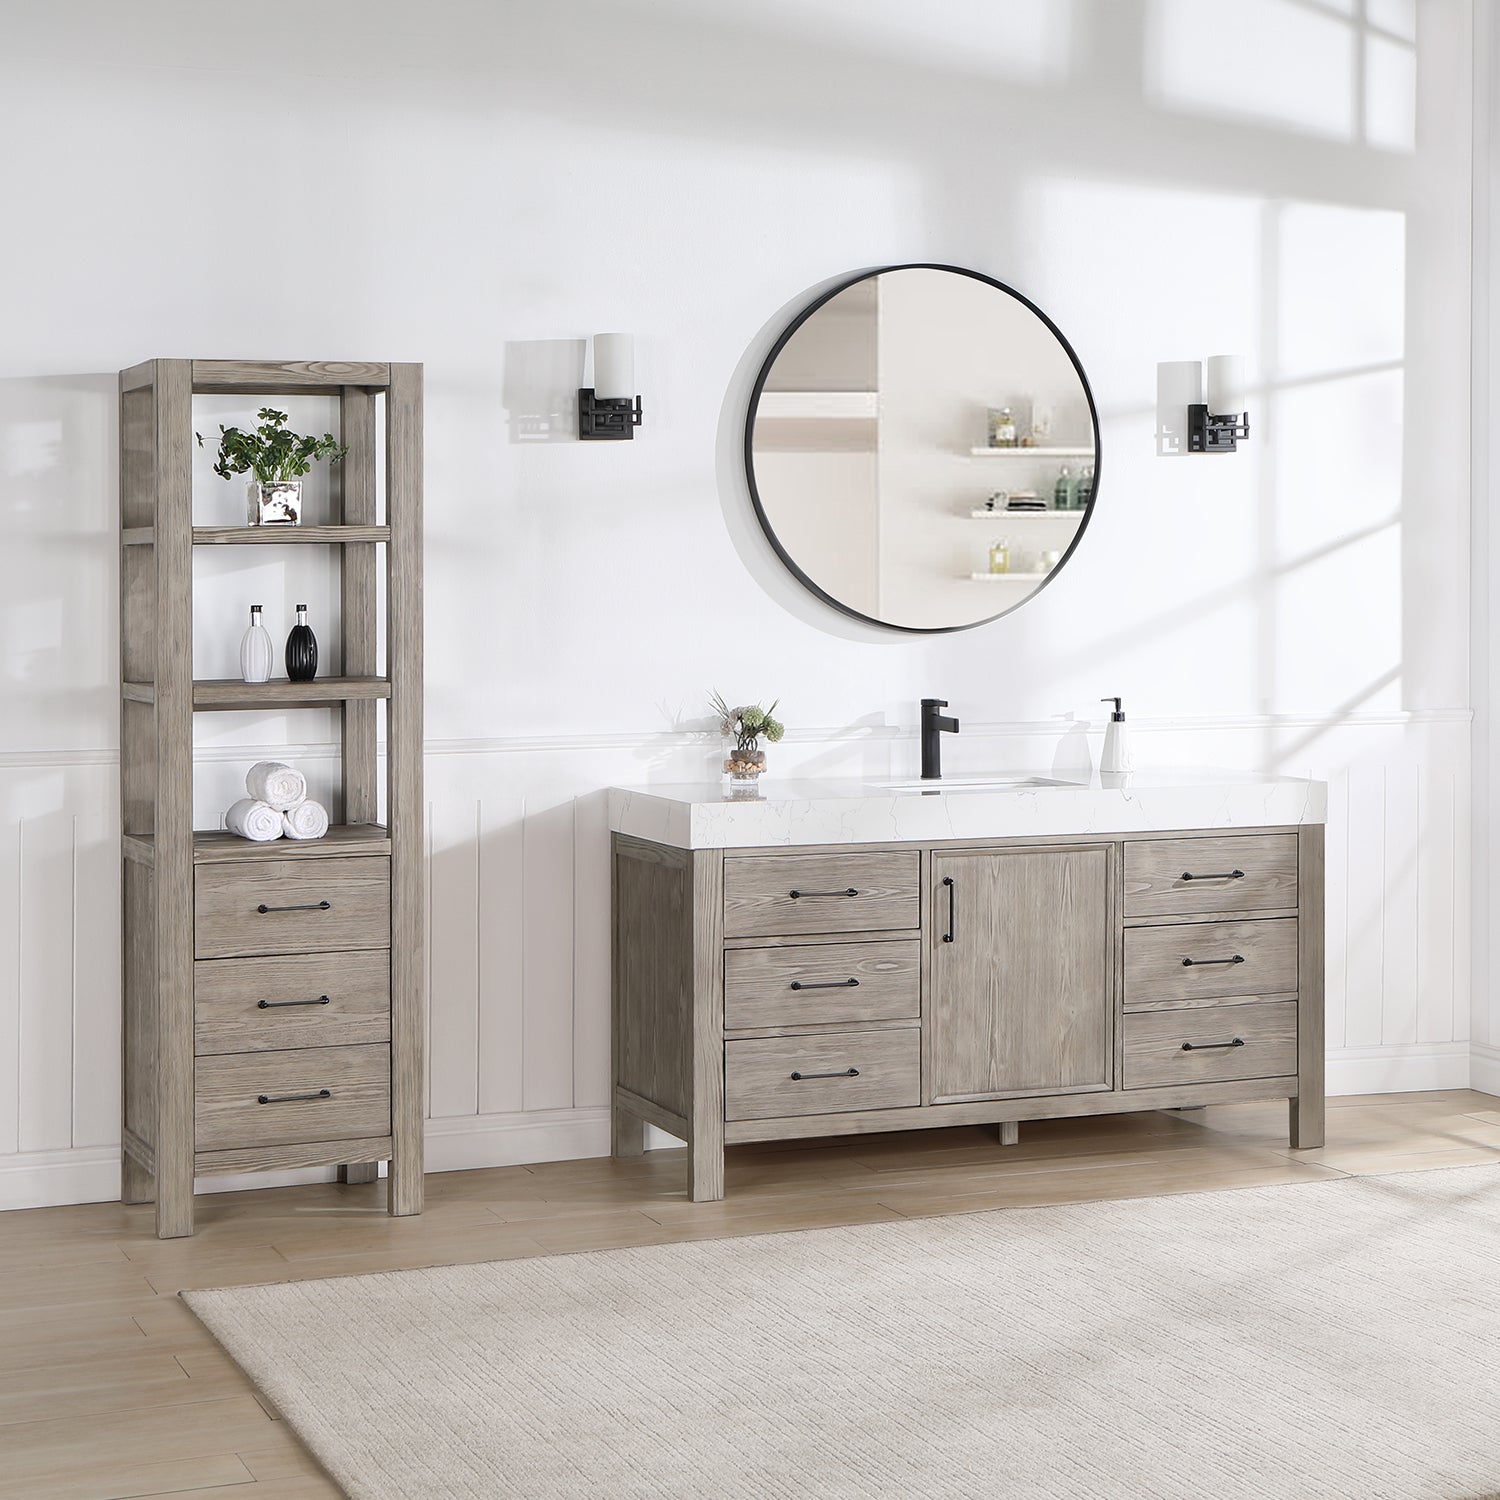 León 60in. Free-standing Single Bathroom Vanity in Fir Wood Grey with Composite top in Lightning White